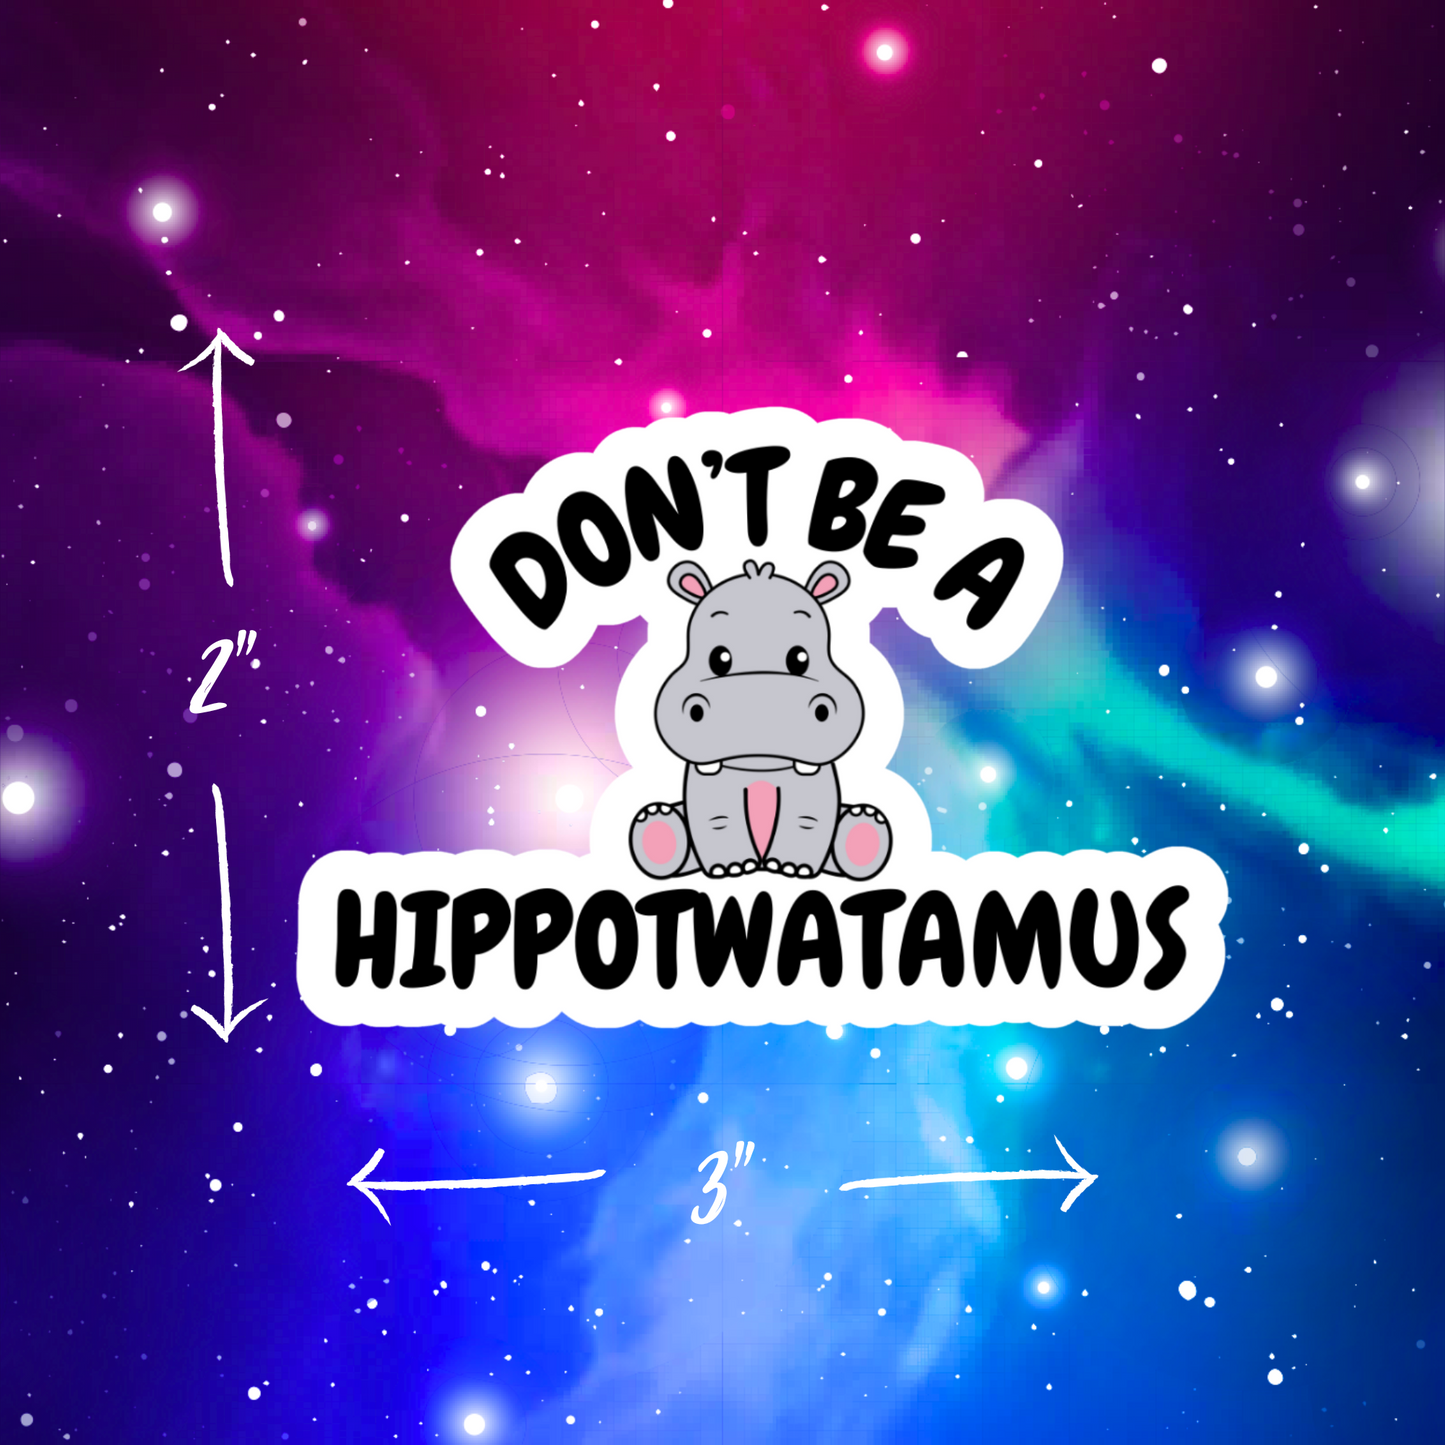 Don't Be A Hippotwatamus Vinyl Sticker